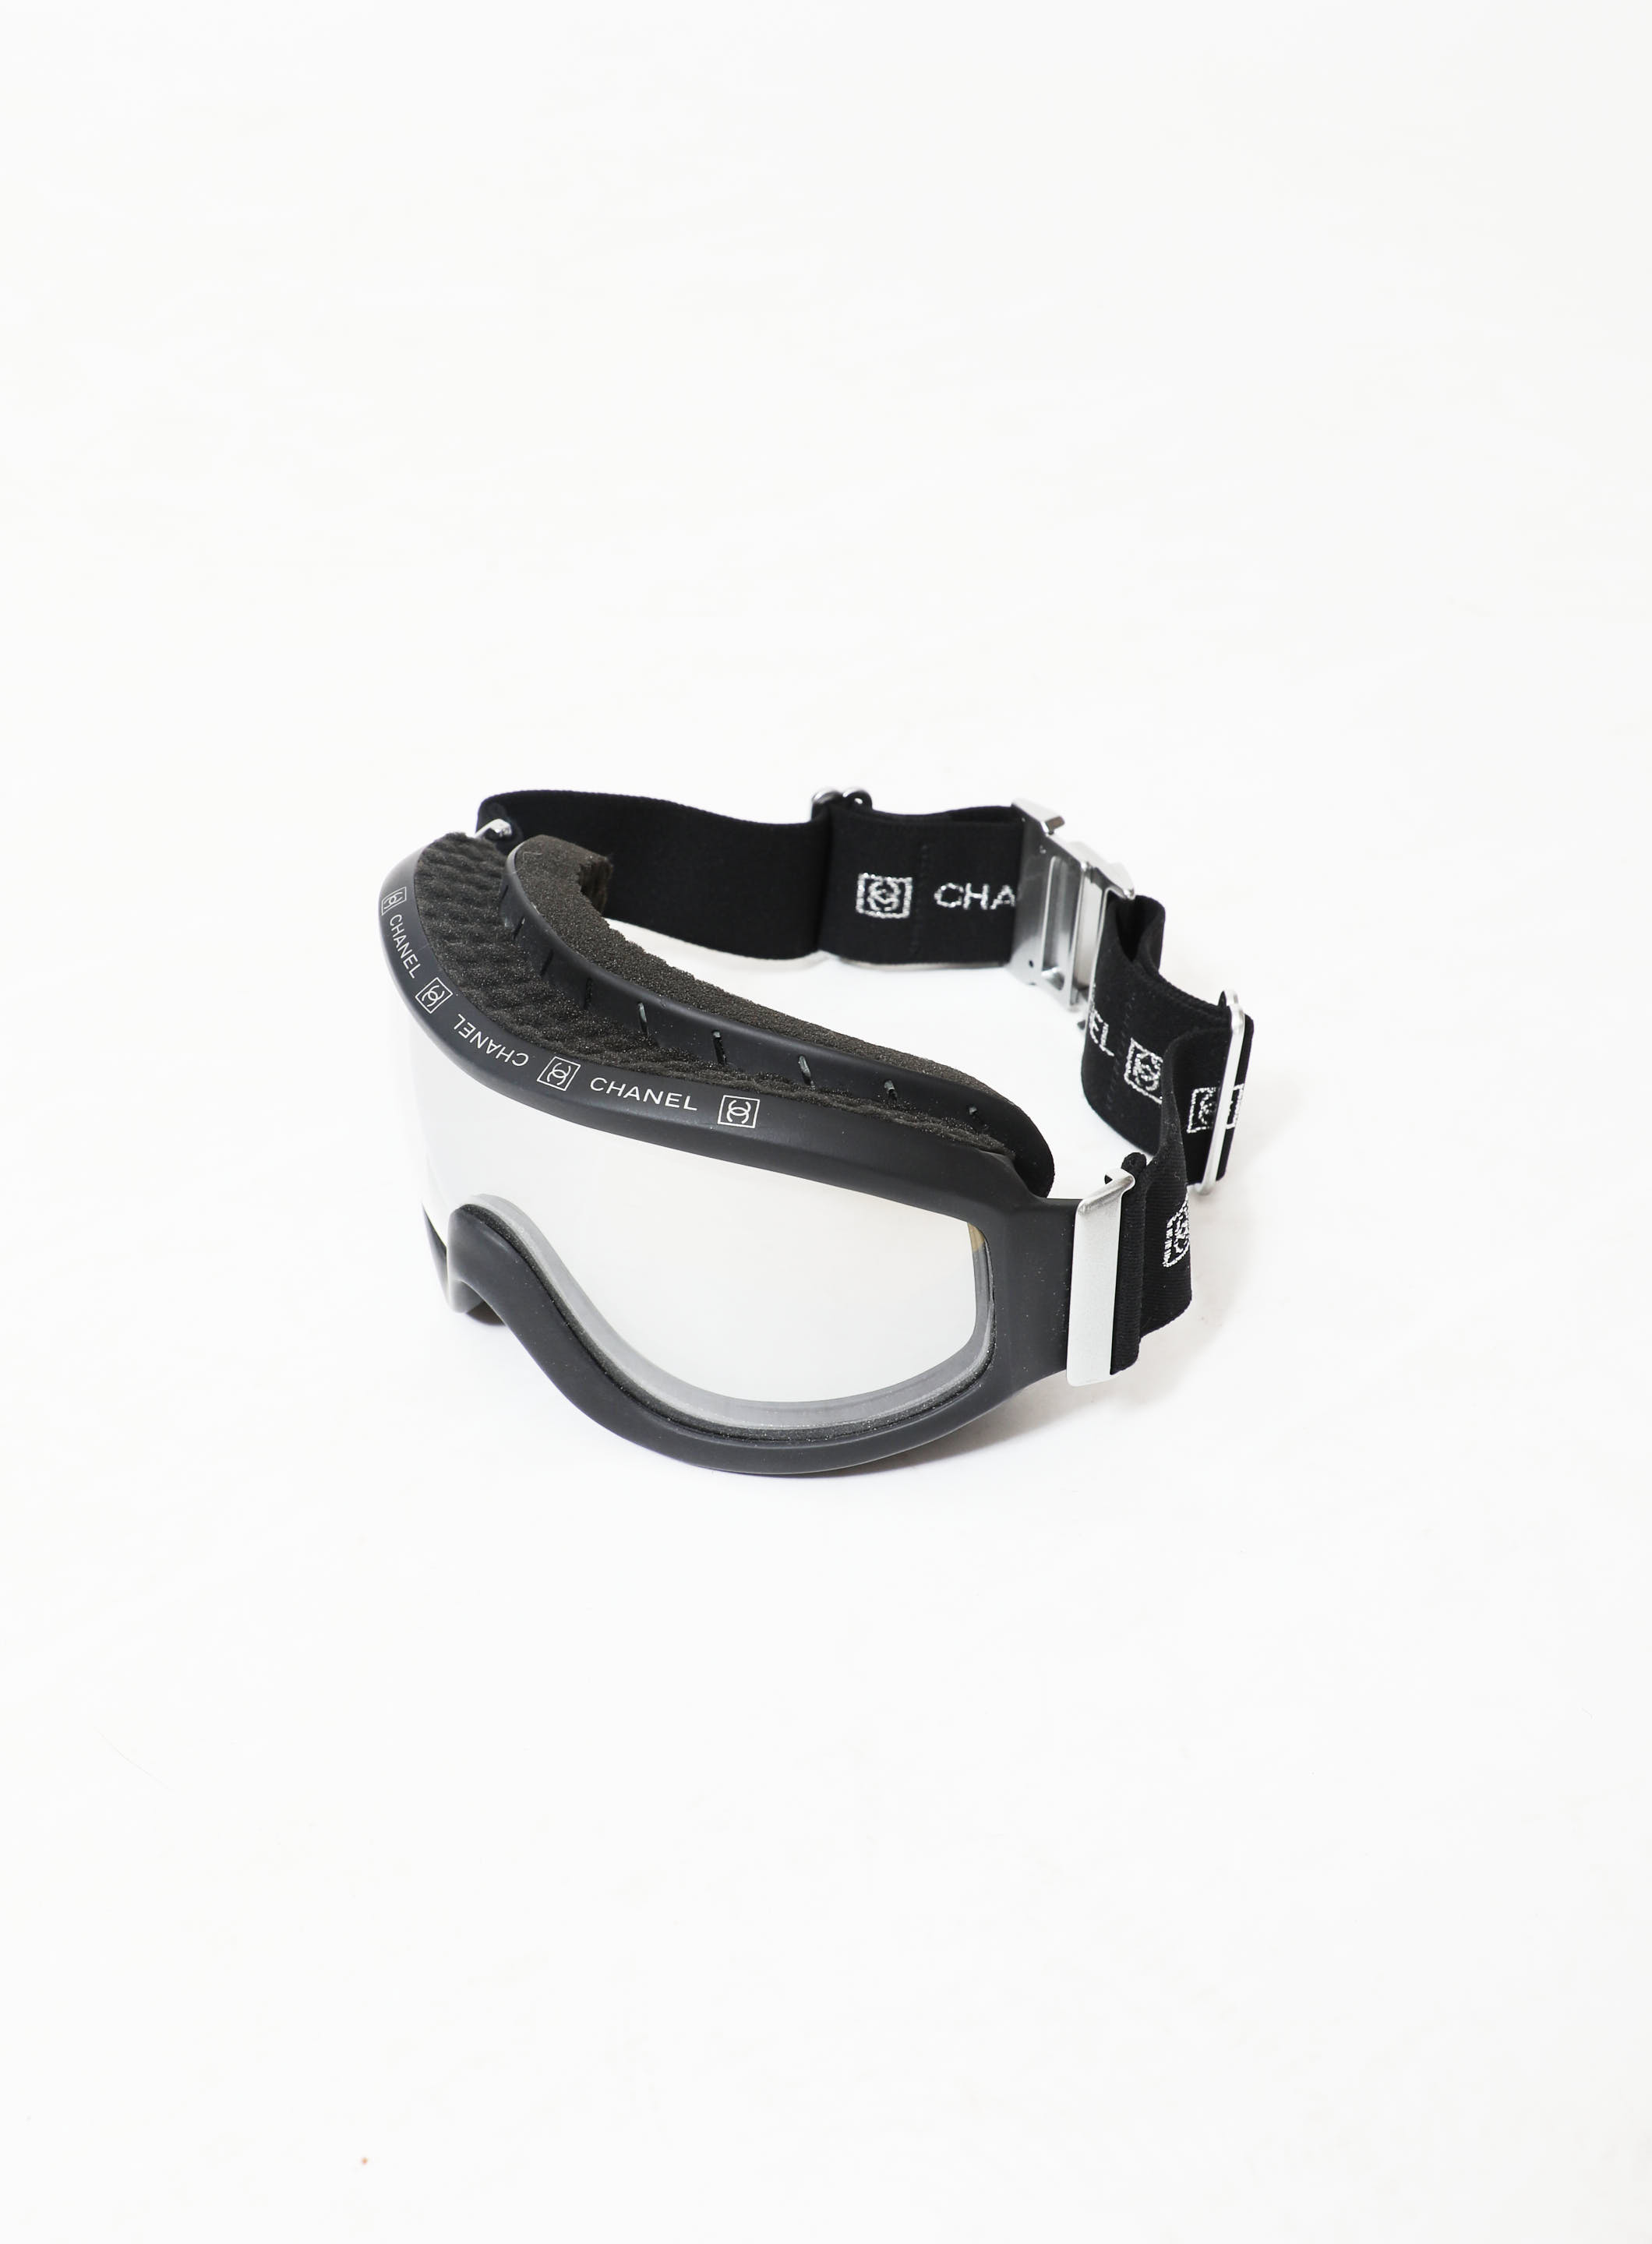 2013 Polarized Ski Goggles